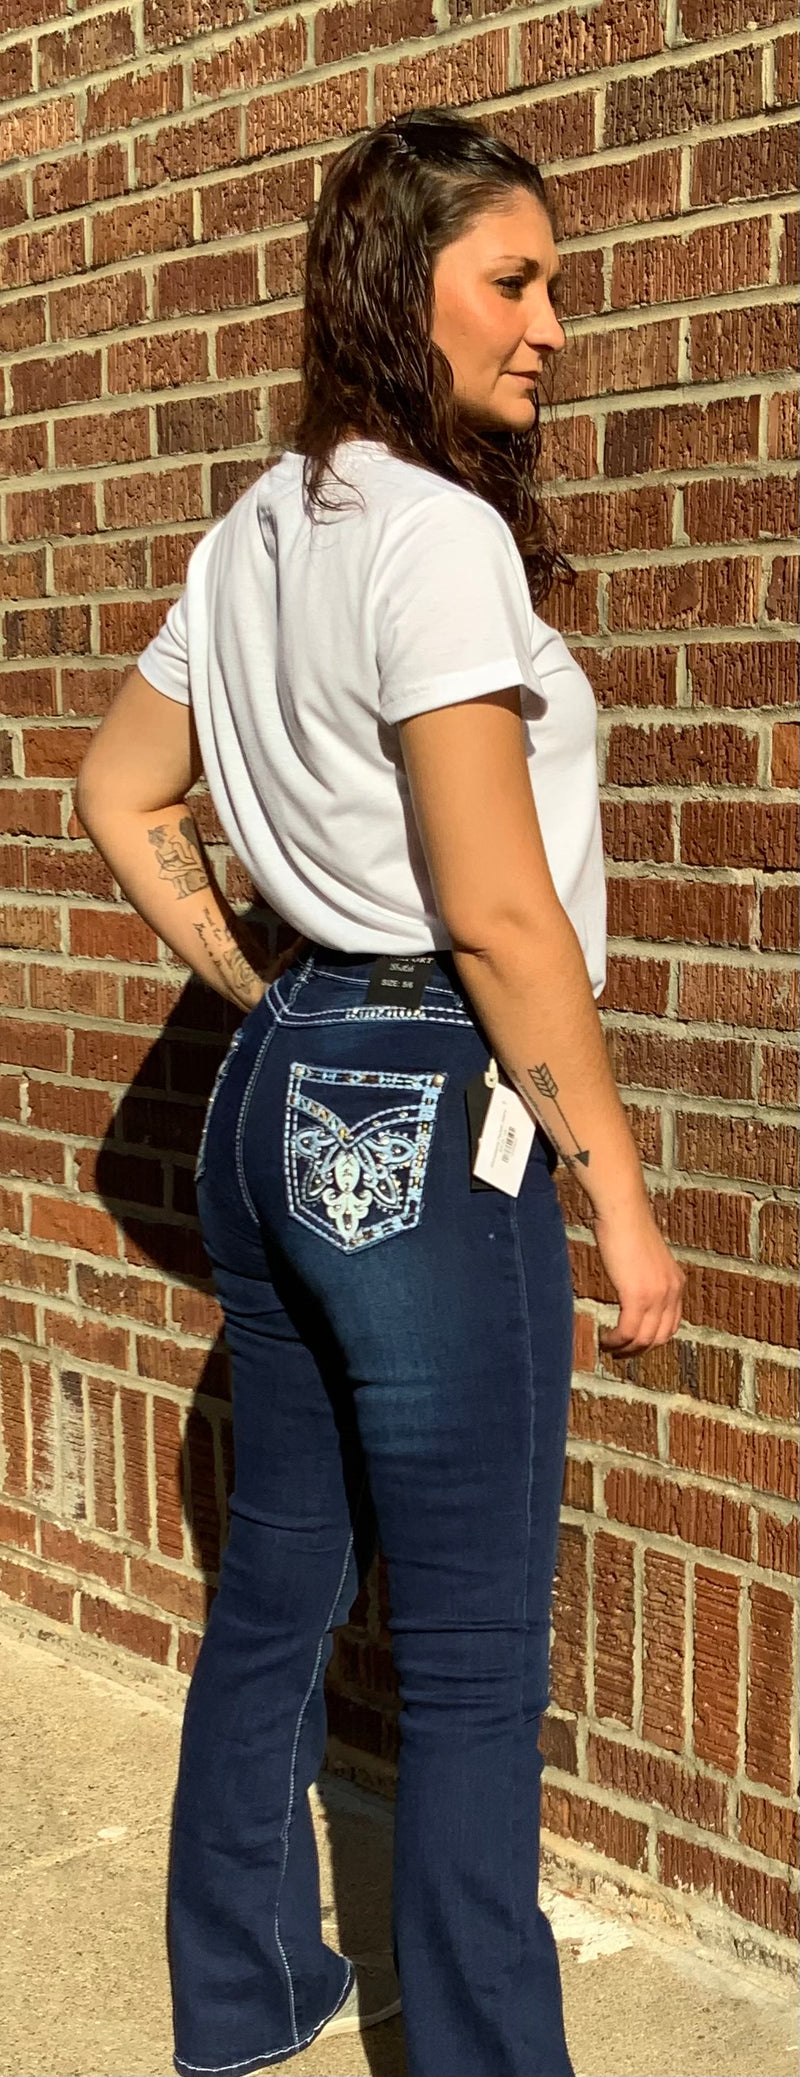 Rhinestone Pocket Jeans